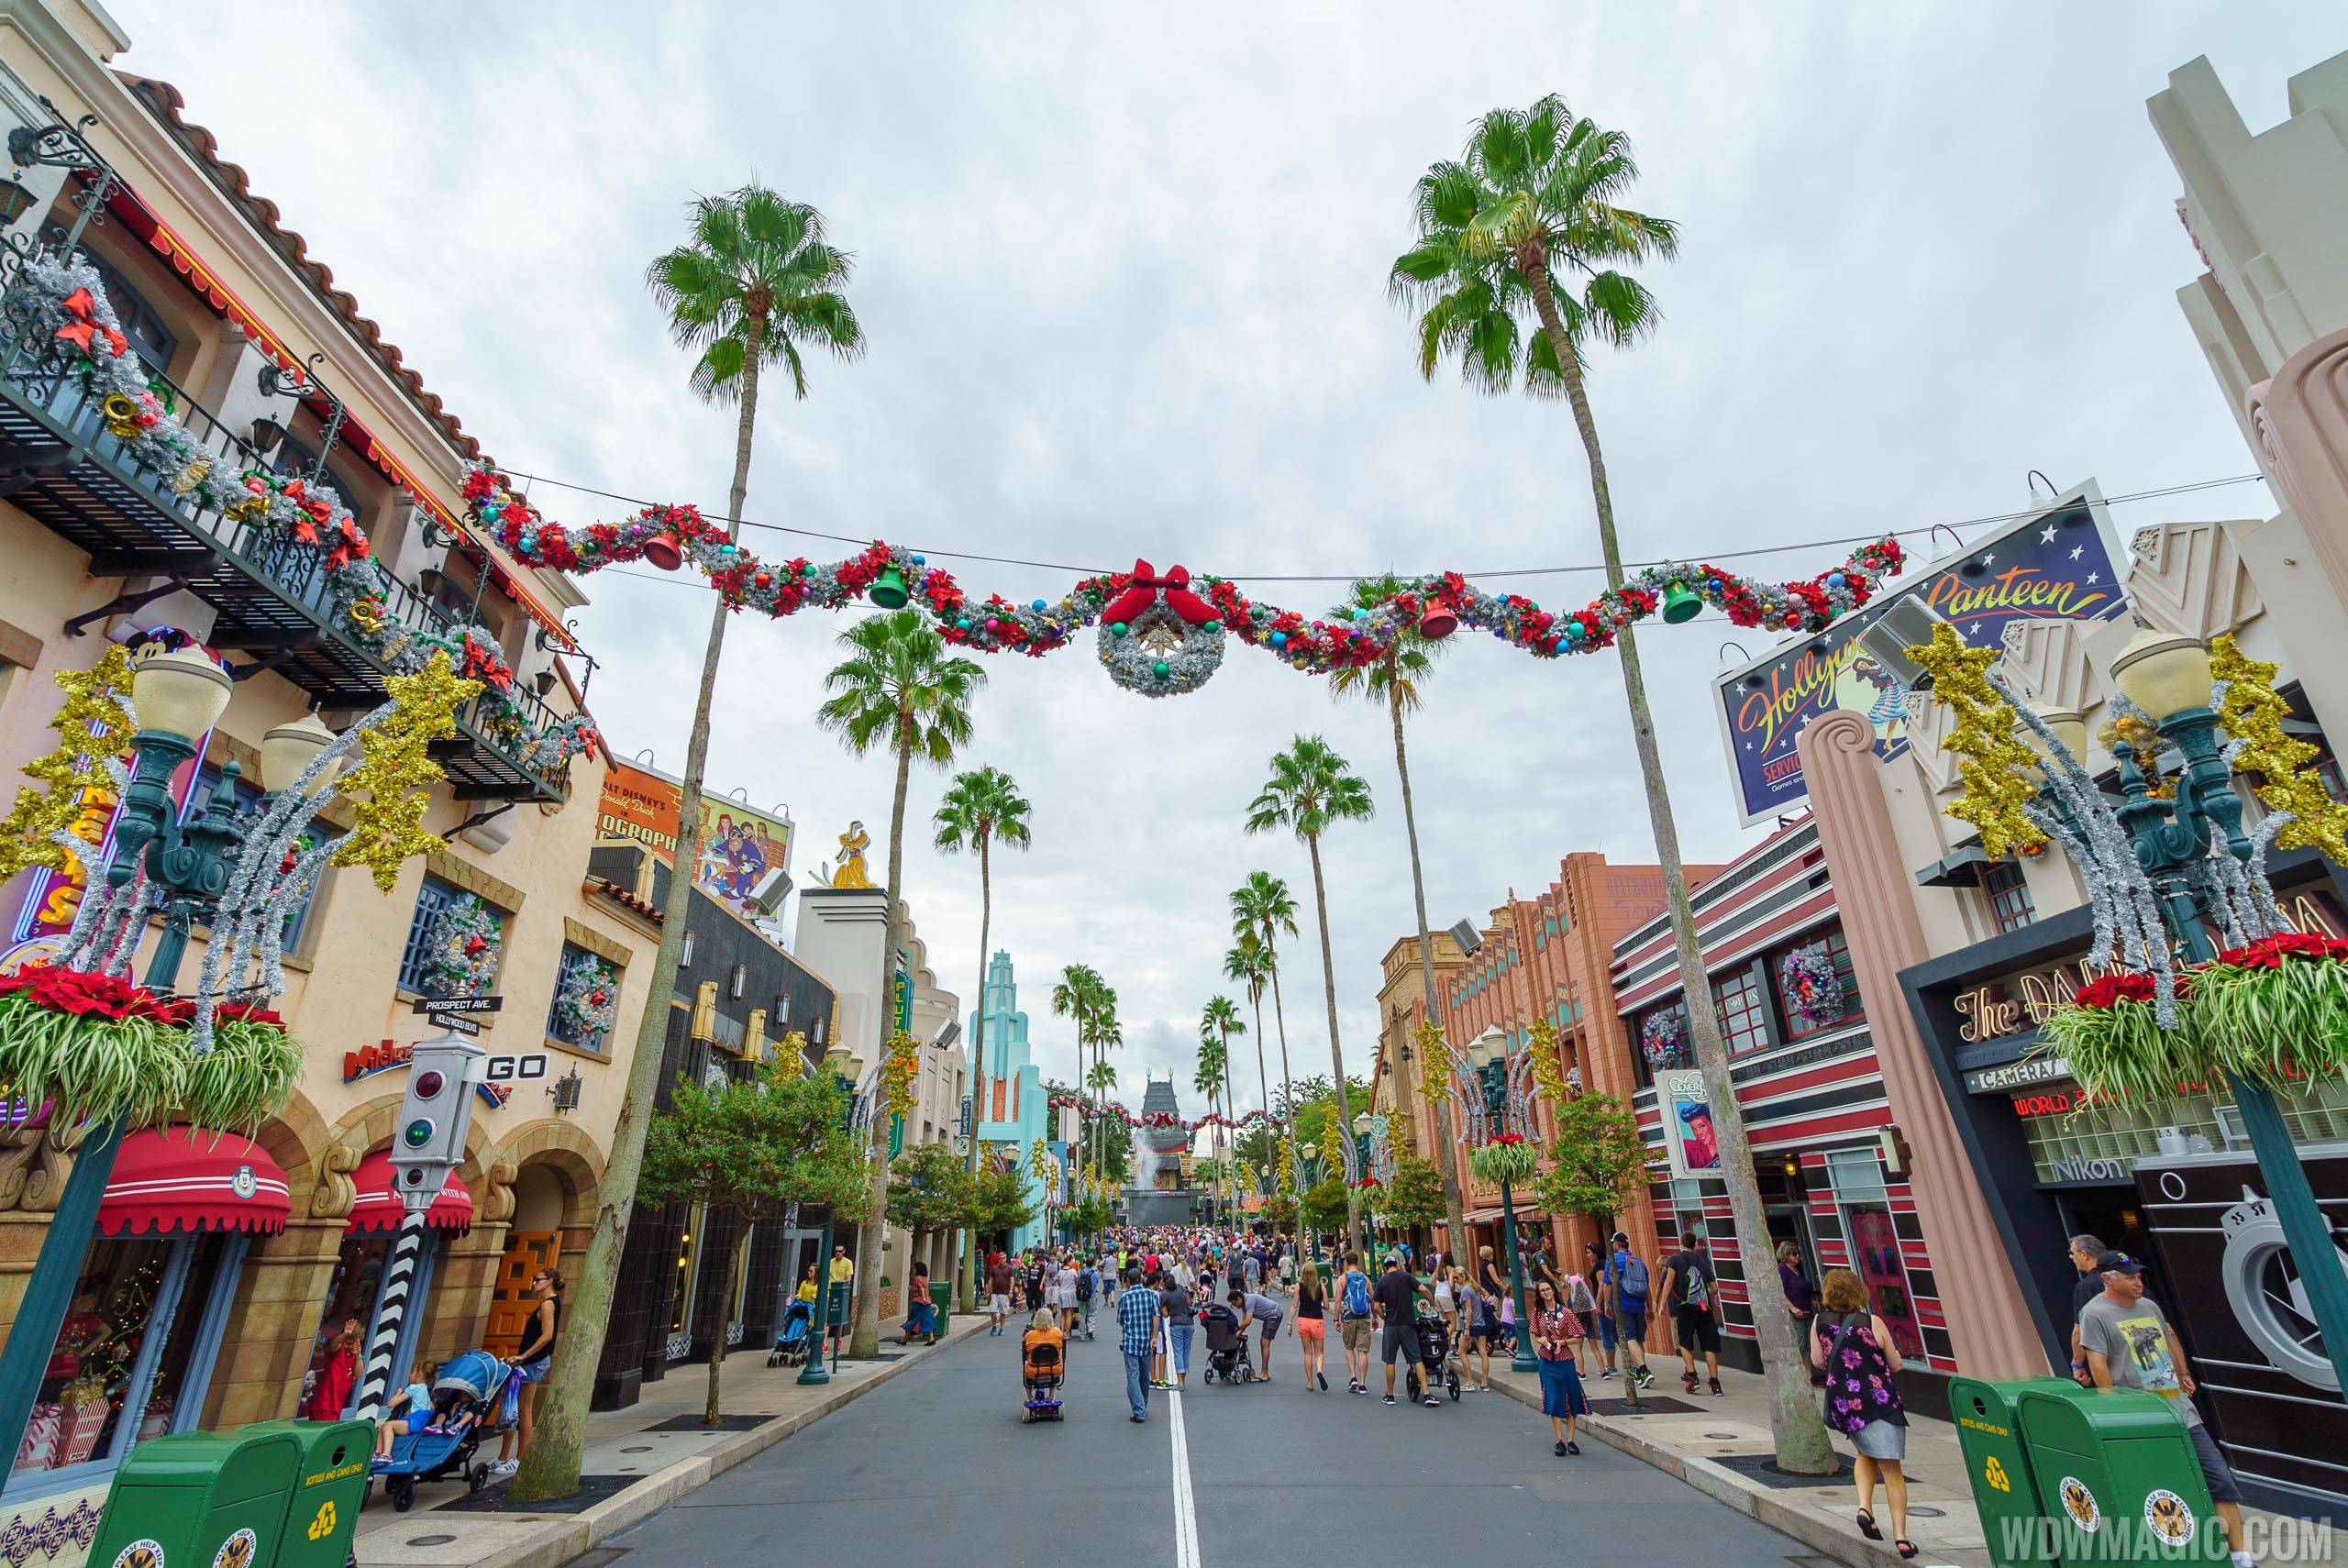 PHOTOS - Holiday decorations go up at Disney's Hollywood Studios